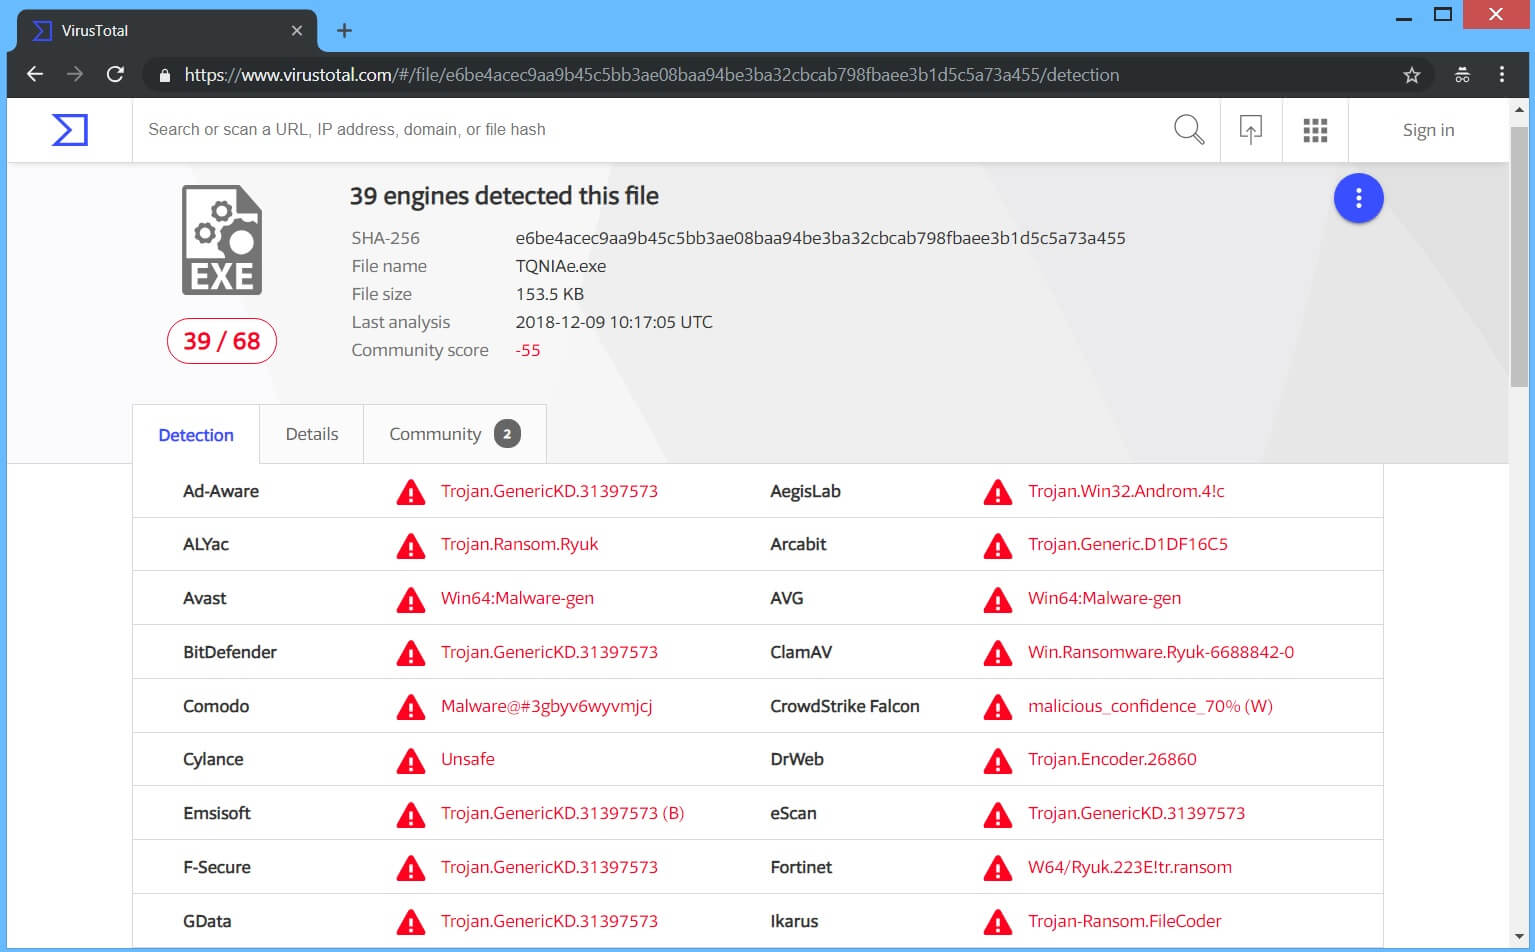 ryuk ransomware virus RYK extension virustotal detection page